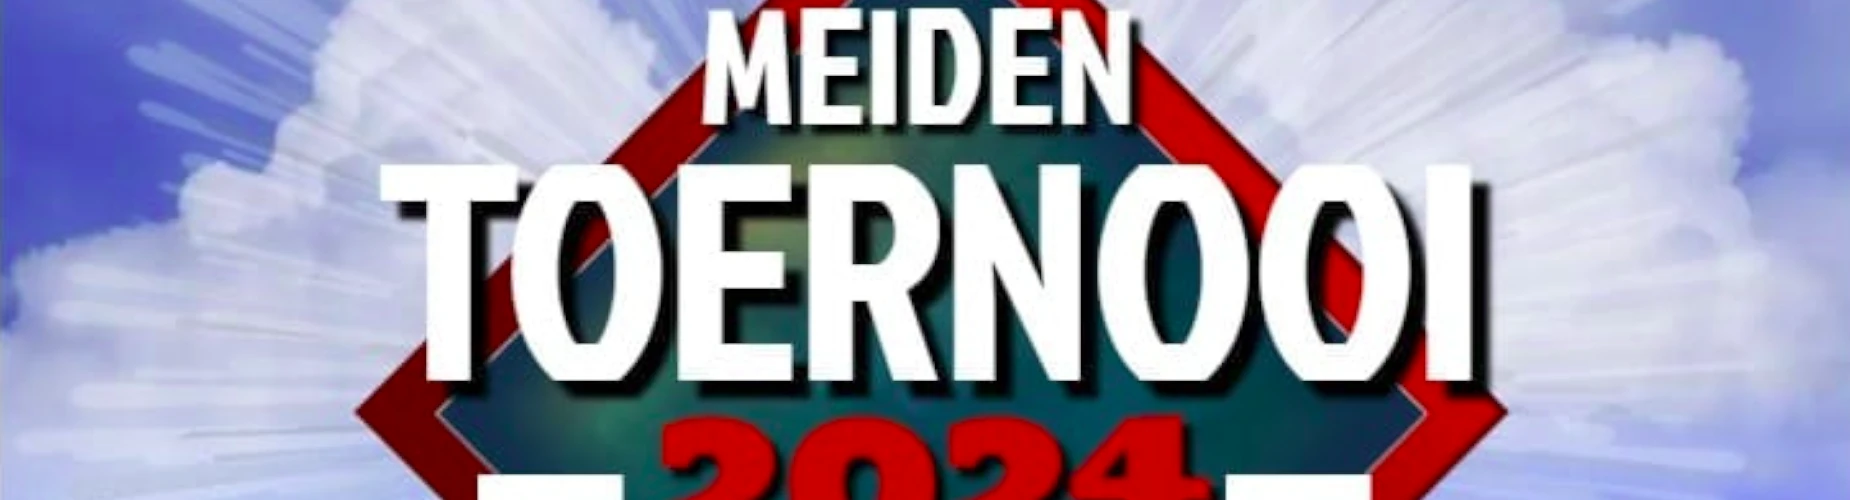 Banner - Meiden Toernooi - VV Terneuzen - Terneuzen